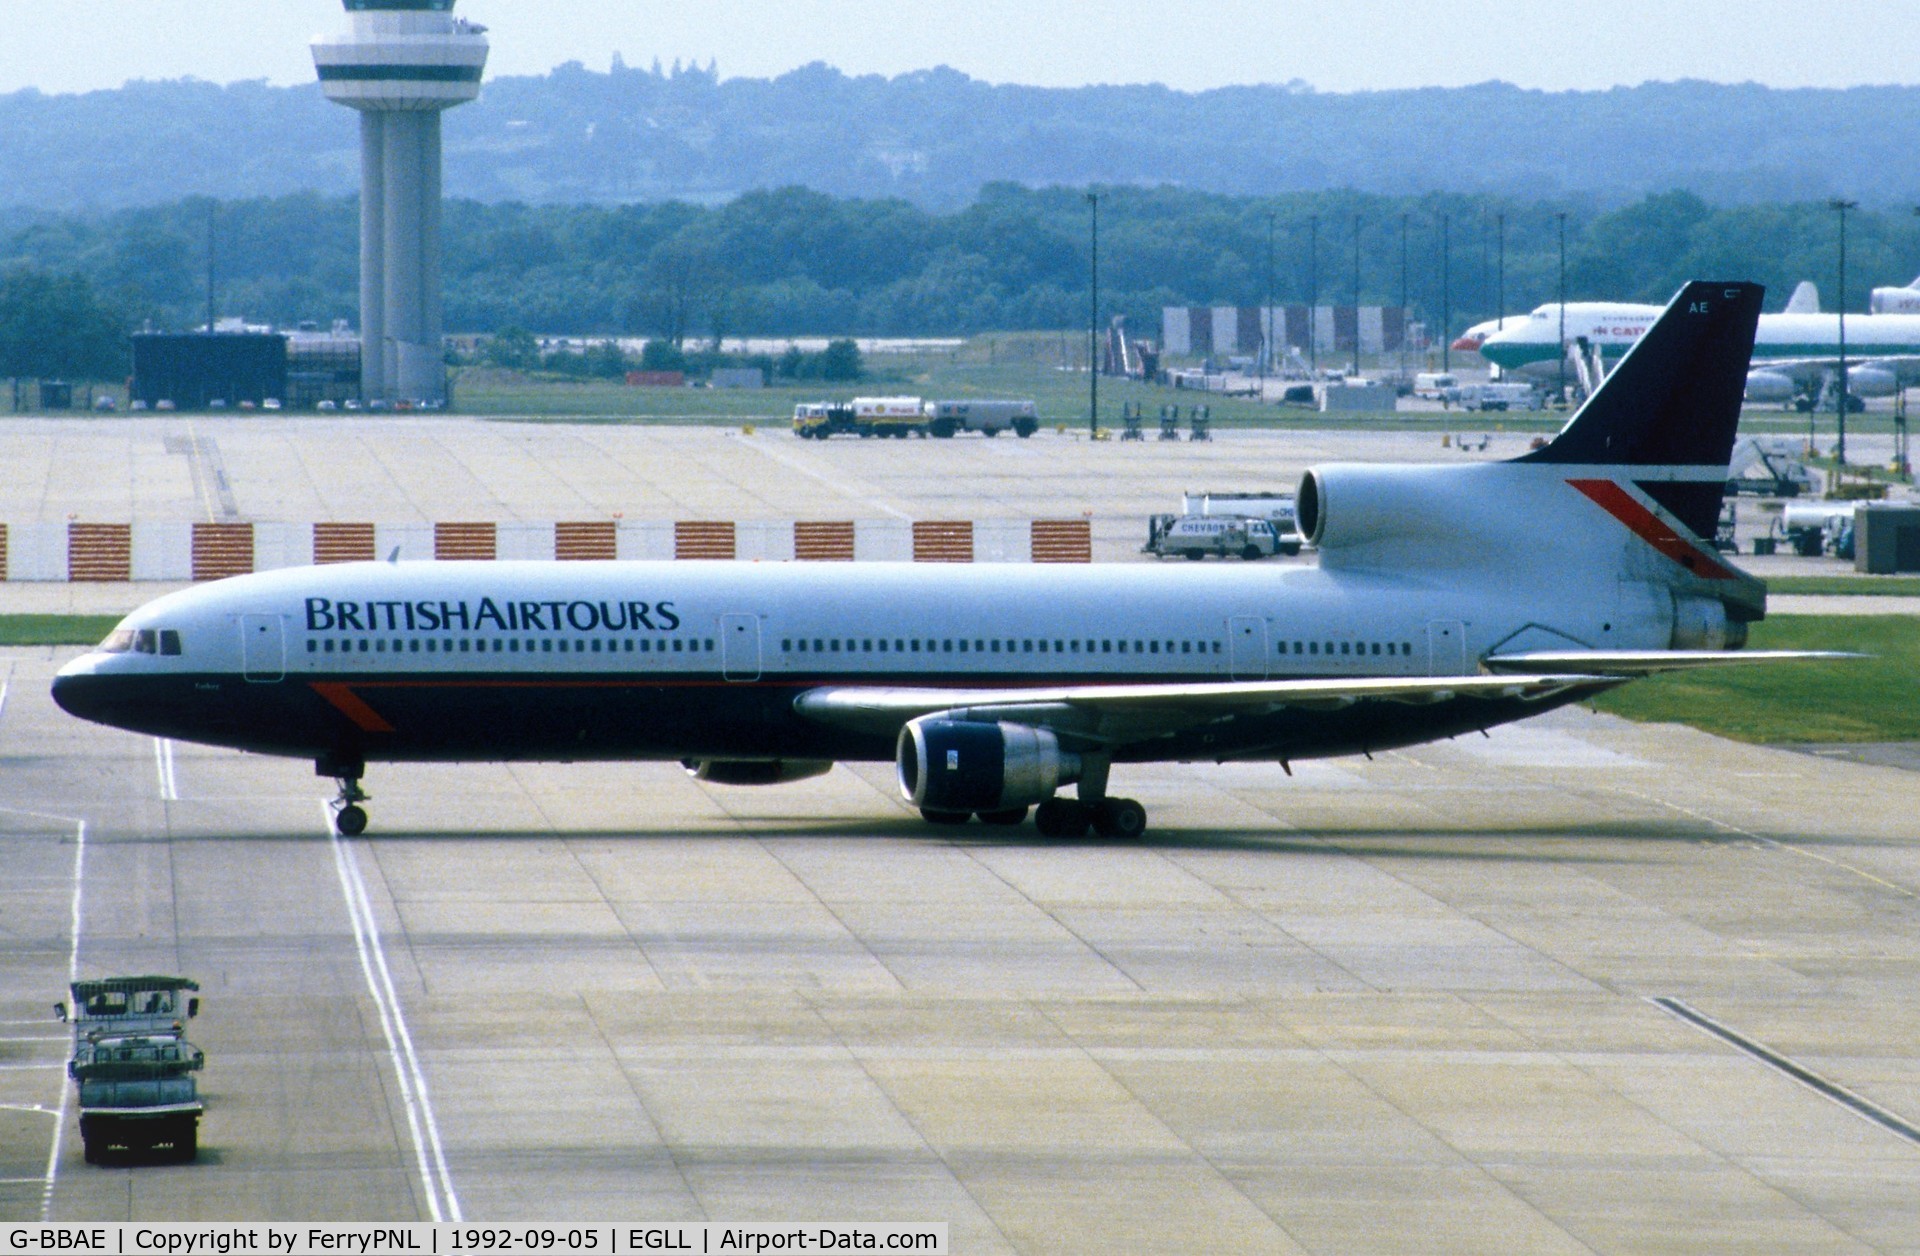 G-BBAE, 1974 Lockheed L-1011-385-1 TriStar 1 C/N 193E-1083, British Airtours L1011 arriving at its gate